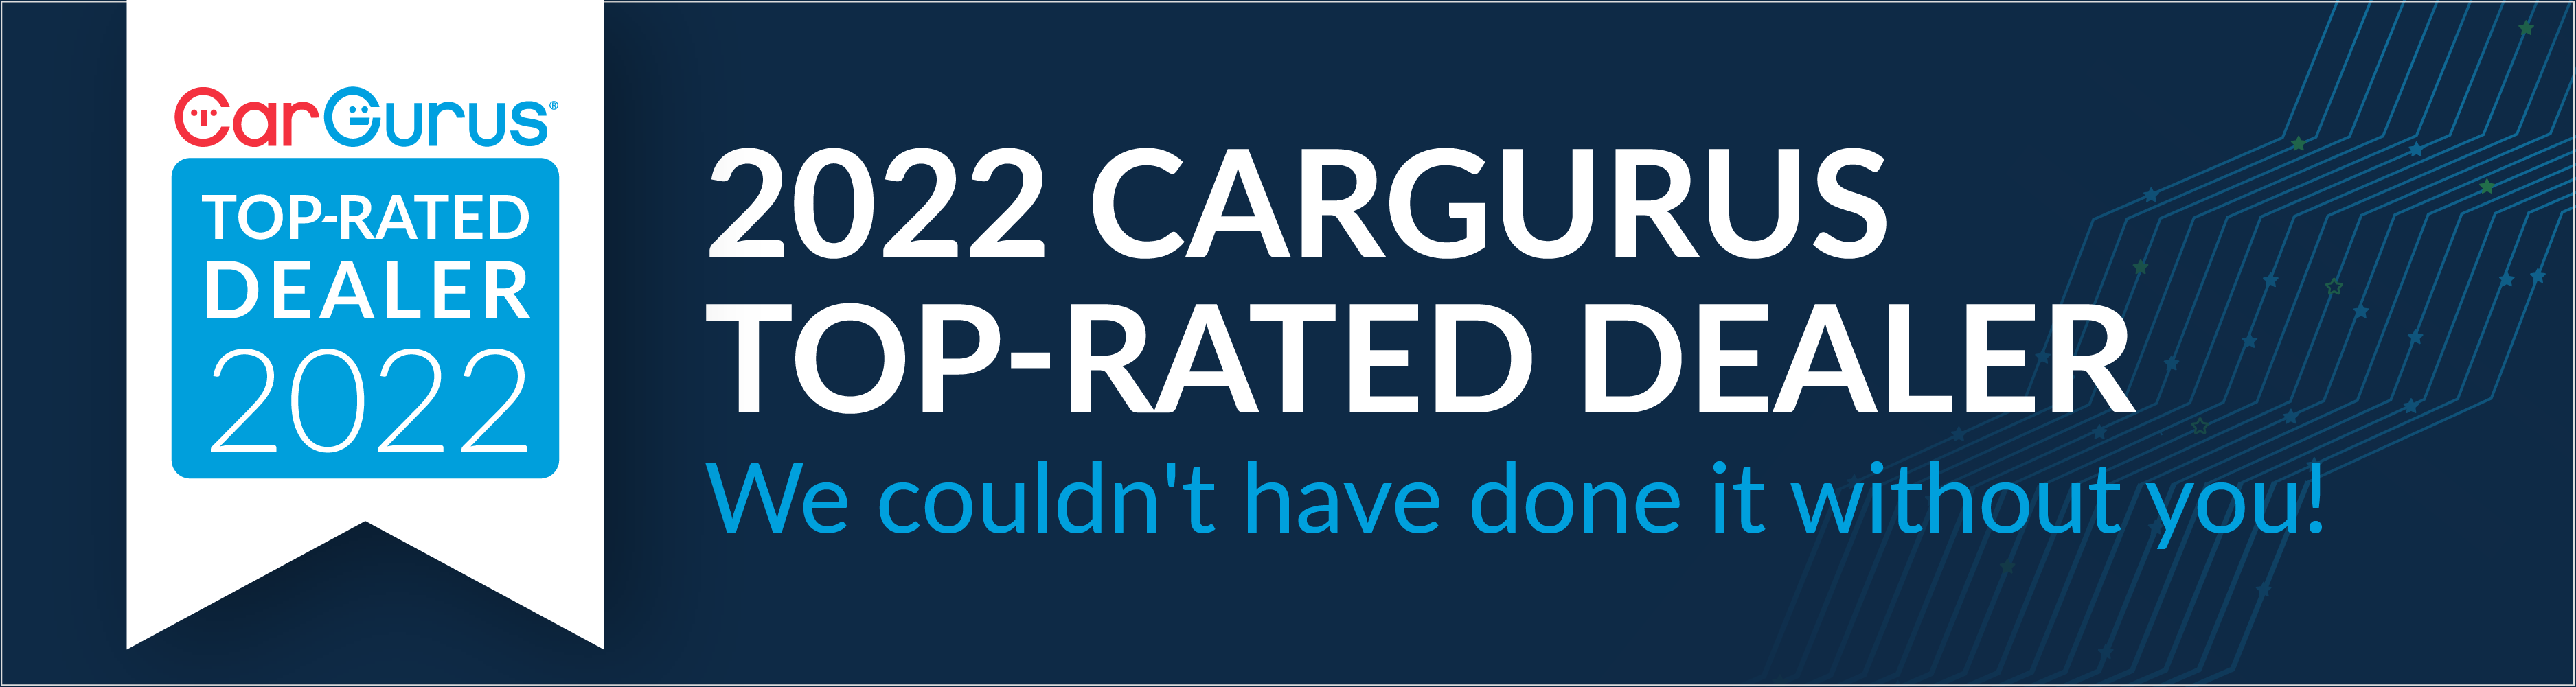 Cargurus_top-rated-dealer-2022